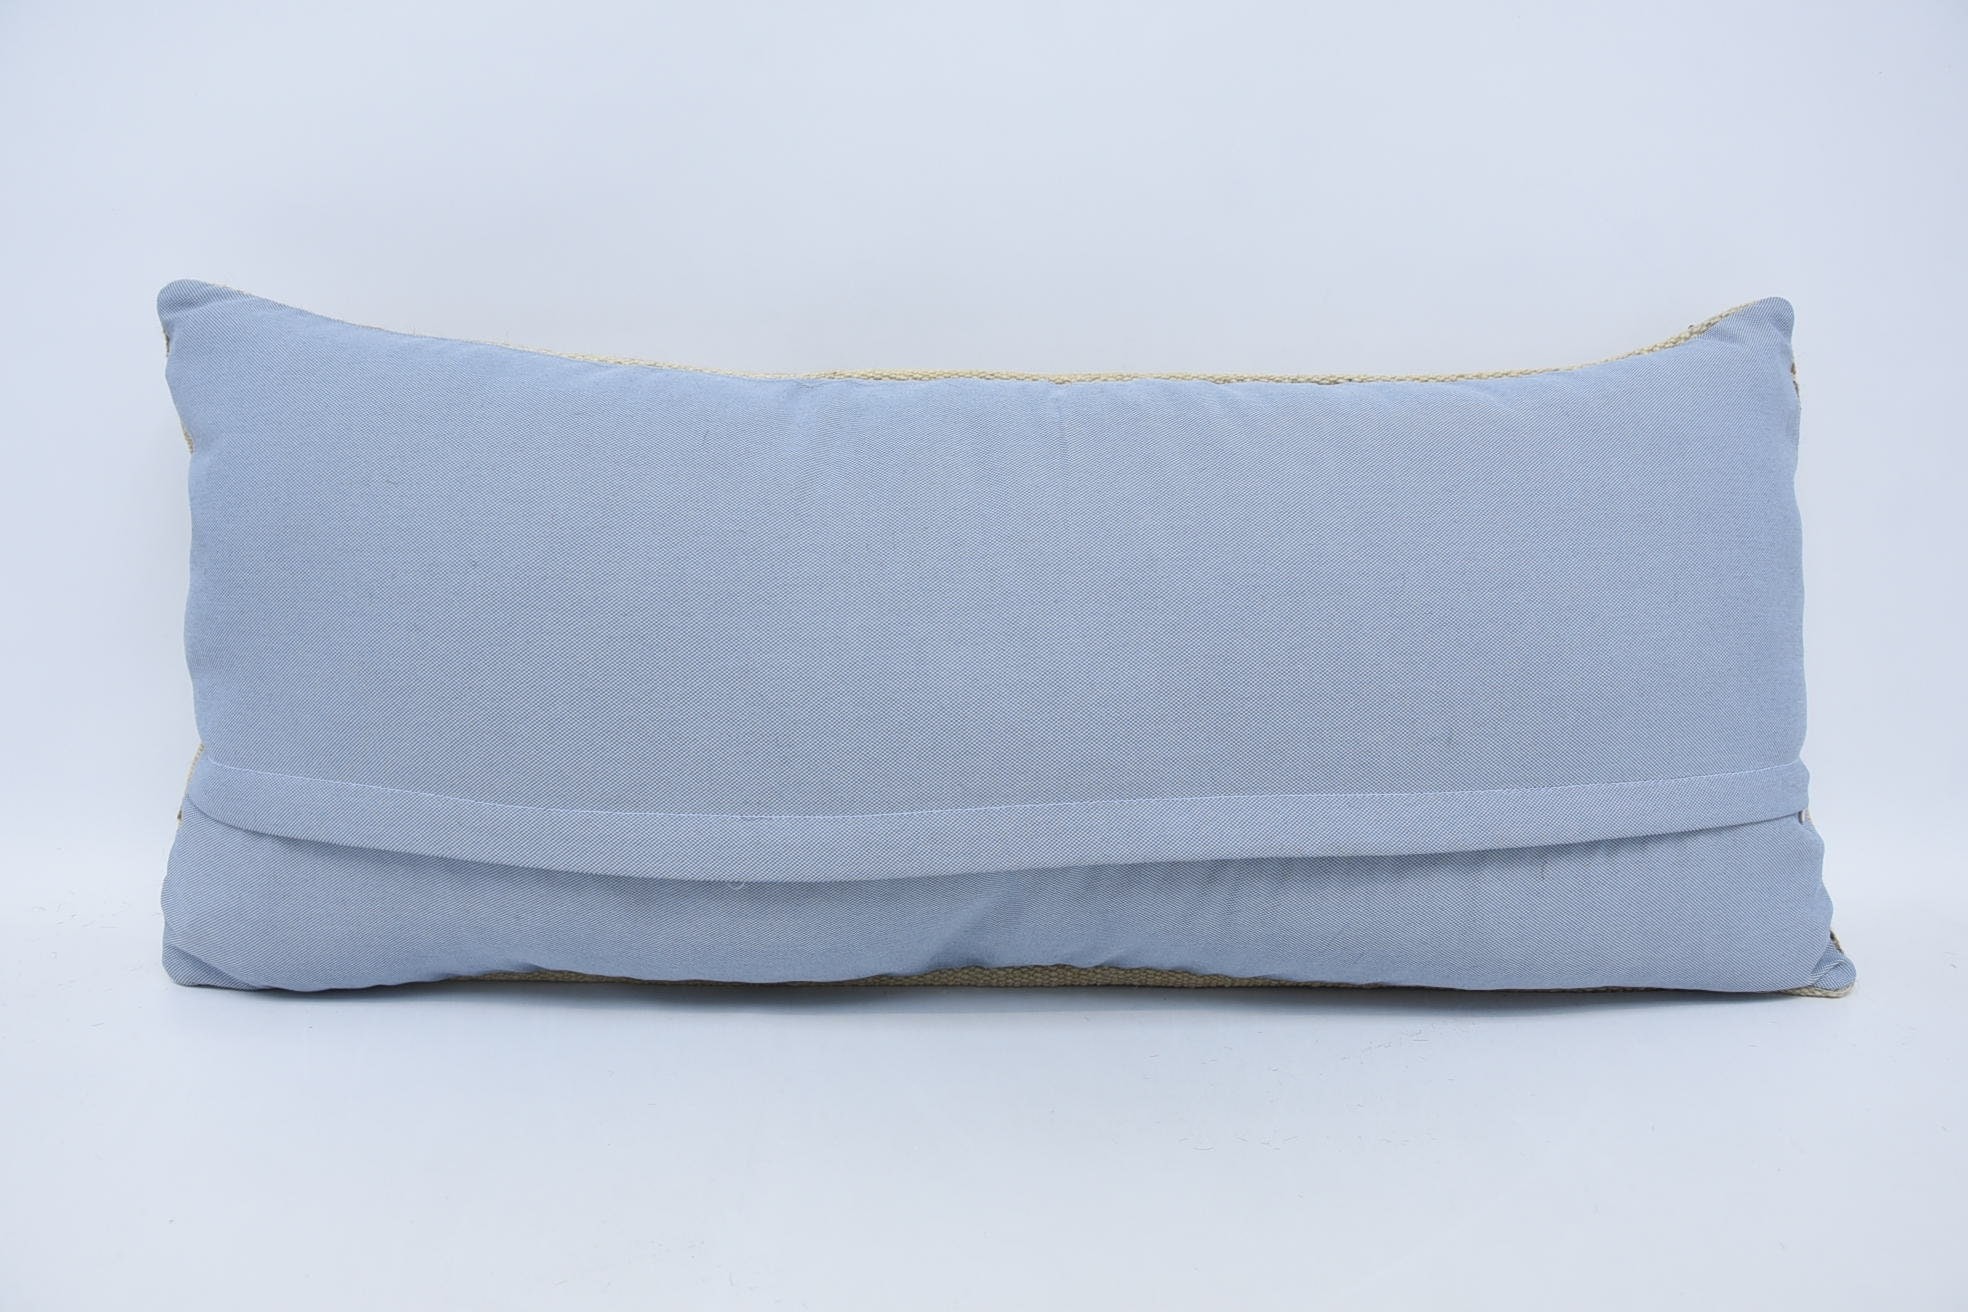 Ethnical Kilim Rug Pillow, Vintage Kilim Pillow Pillow, Boho Pillow, Southwestern Pillow Case, 16"x36" Beige Cushion Case, Turkish Pillow